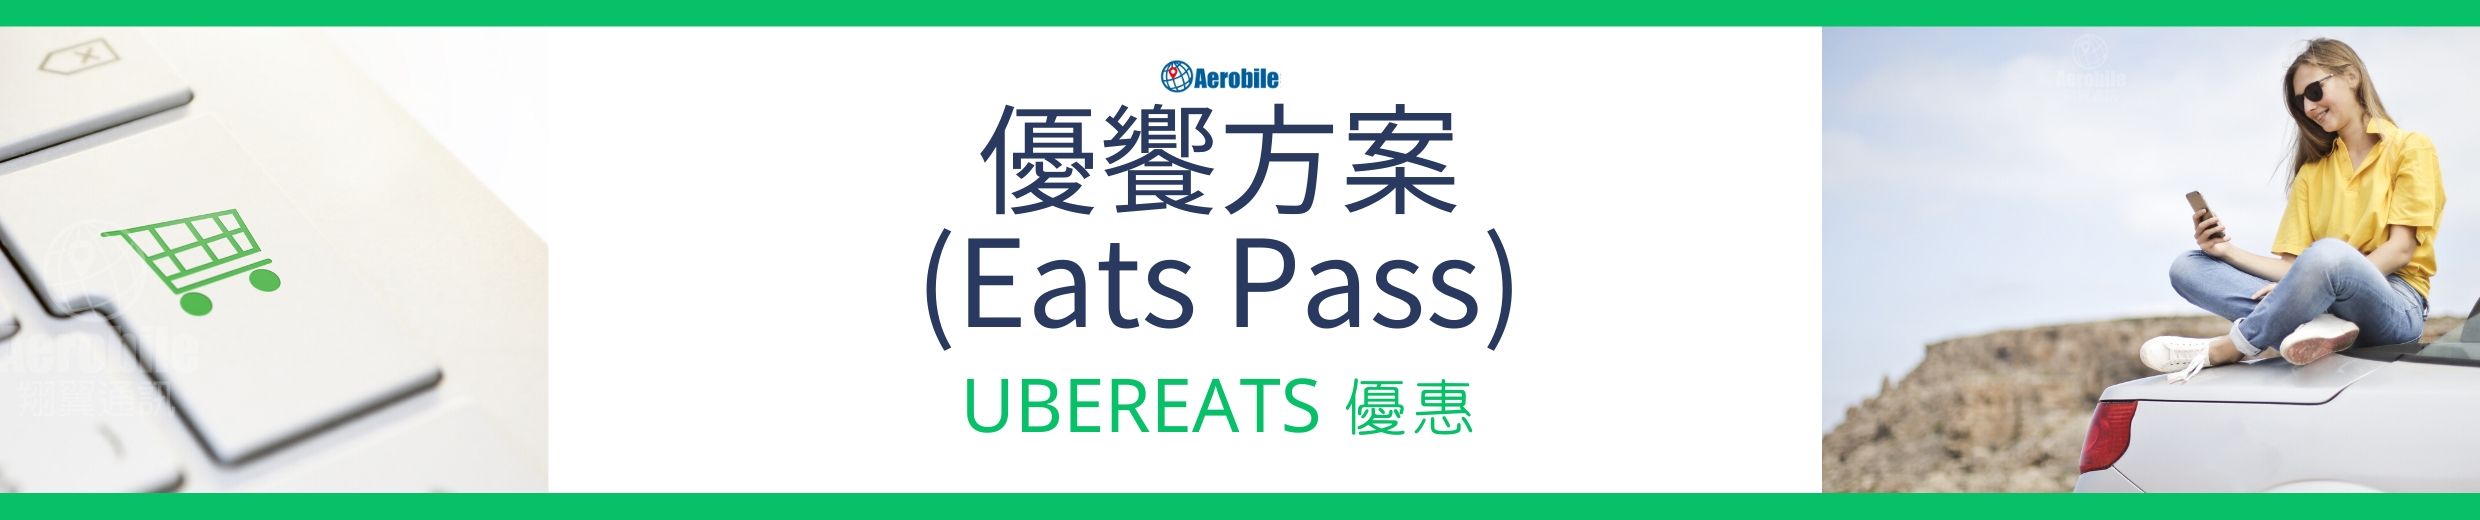 Uber Eats 優饗方案 (Eats Pass)介紹-aerobile